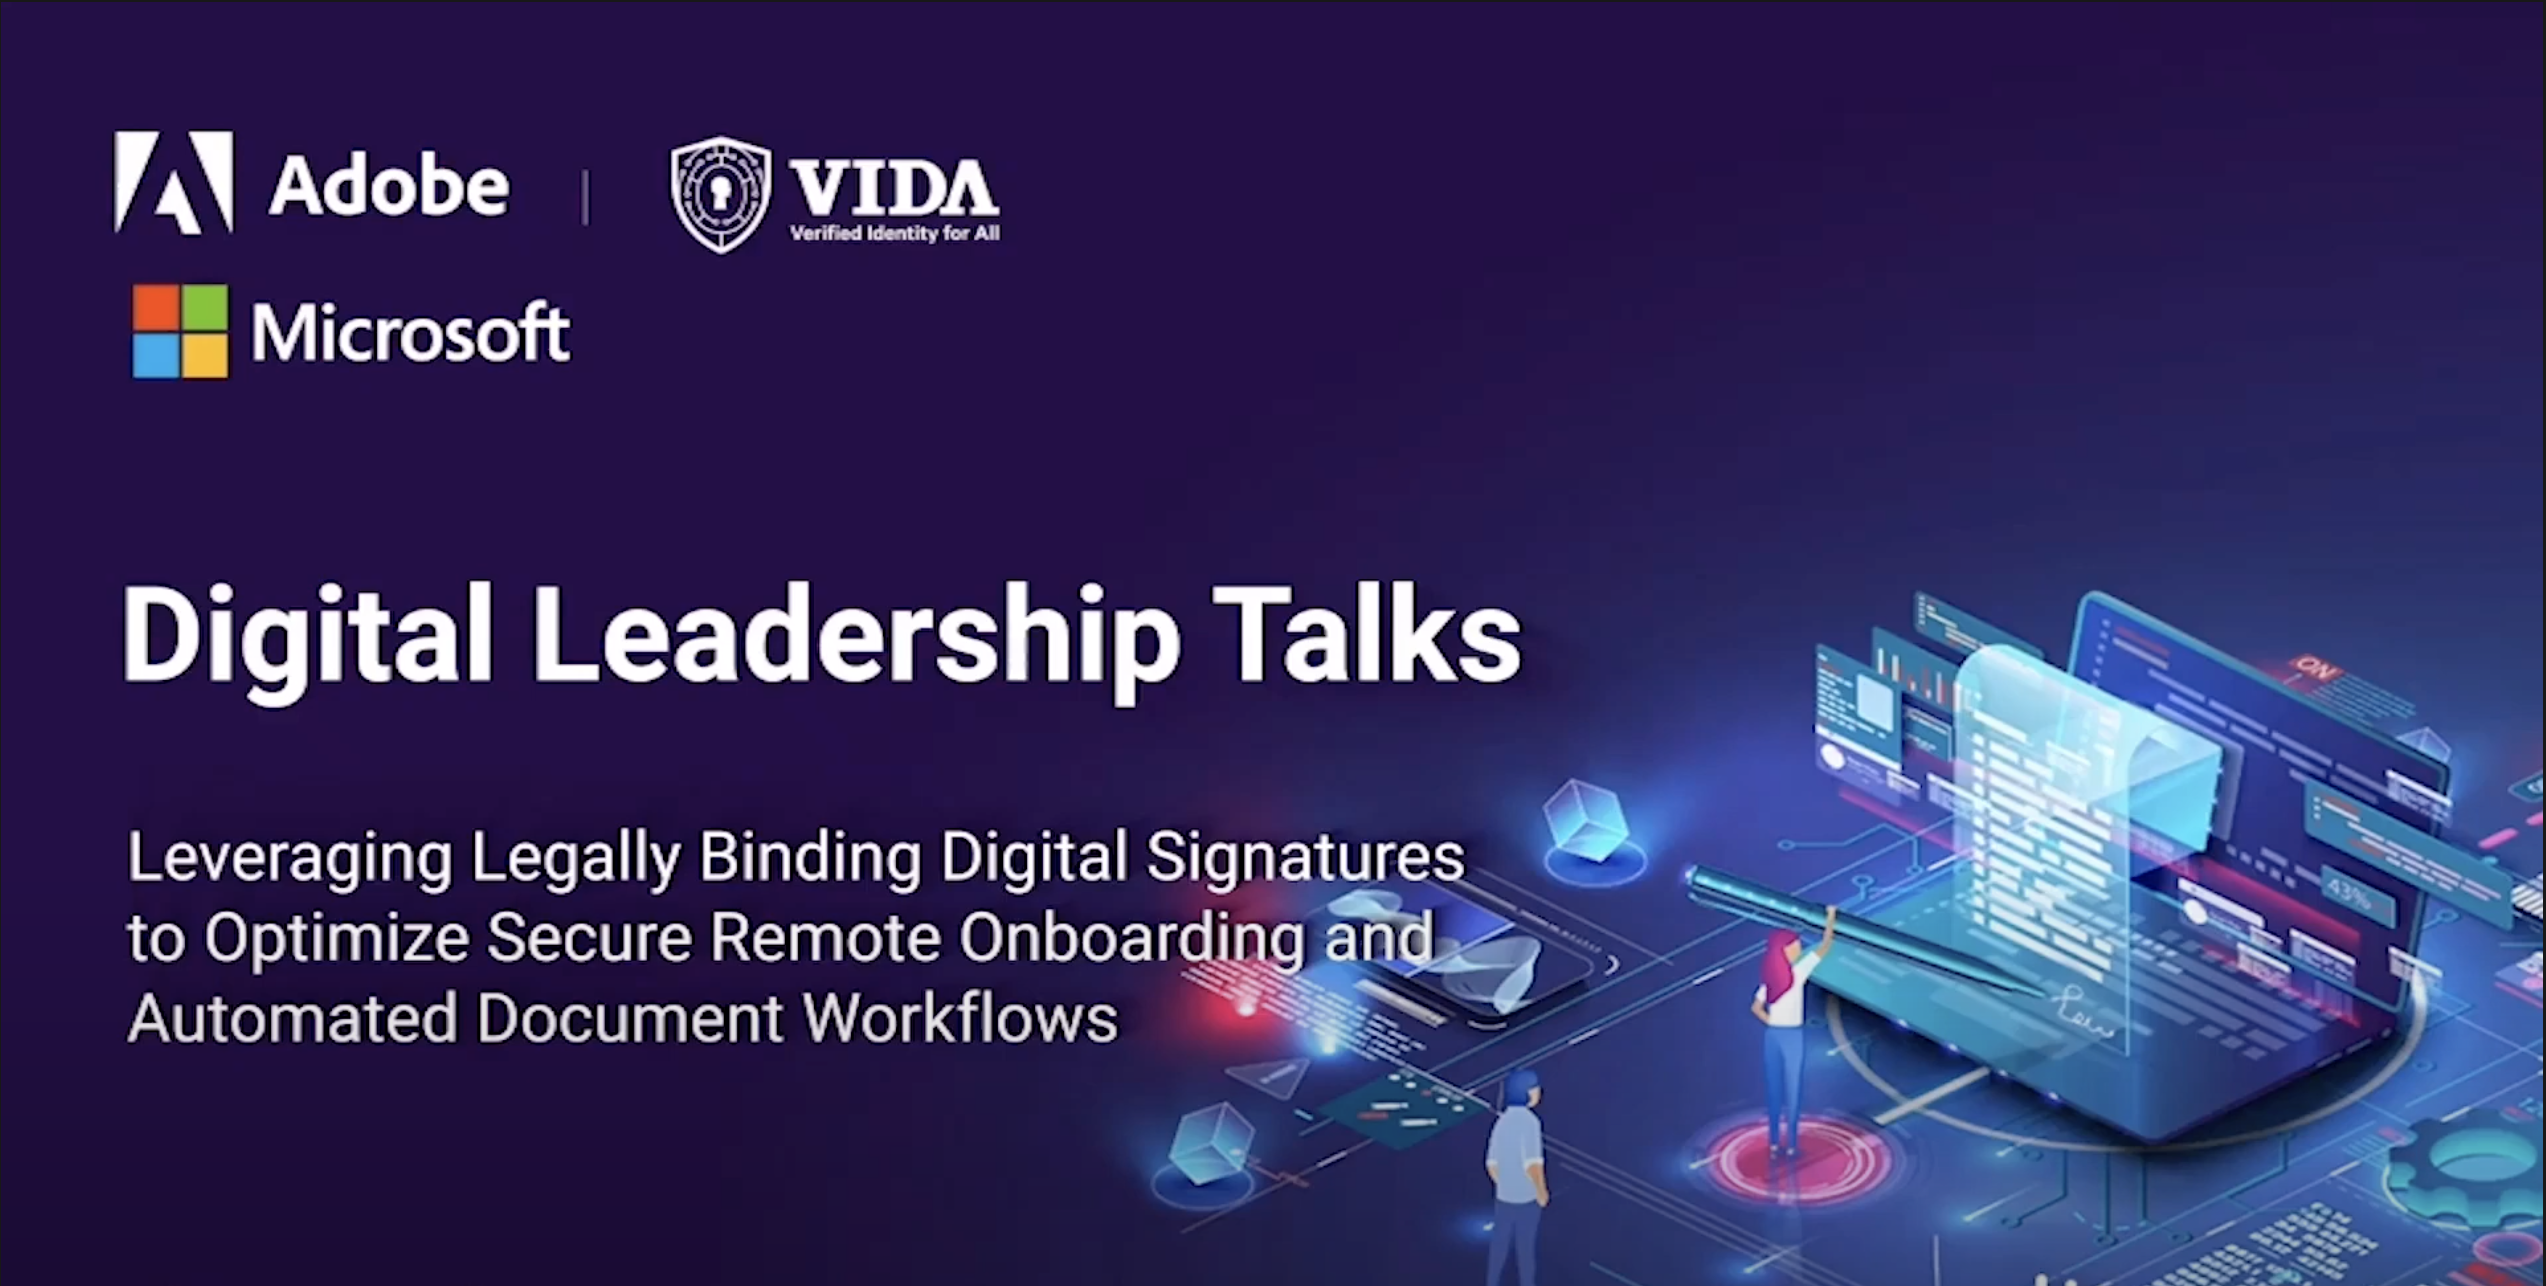 VIDA Partners with Adobe & Microsoft to secure digital identities.